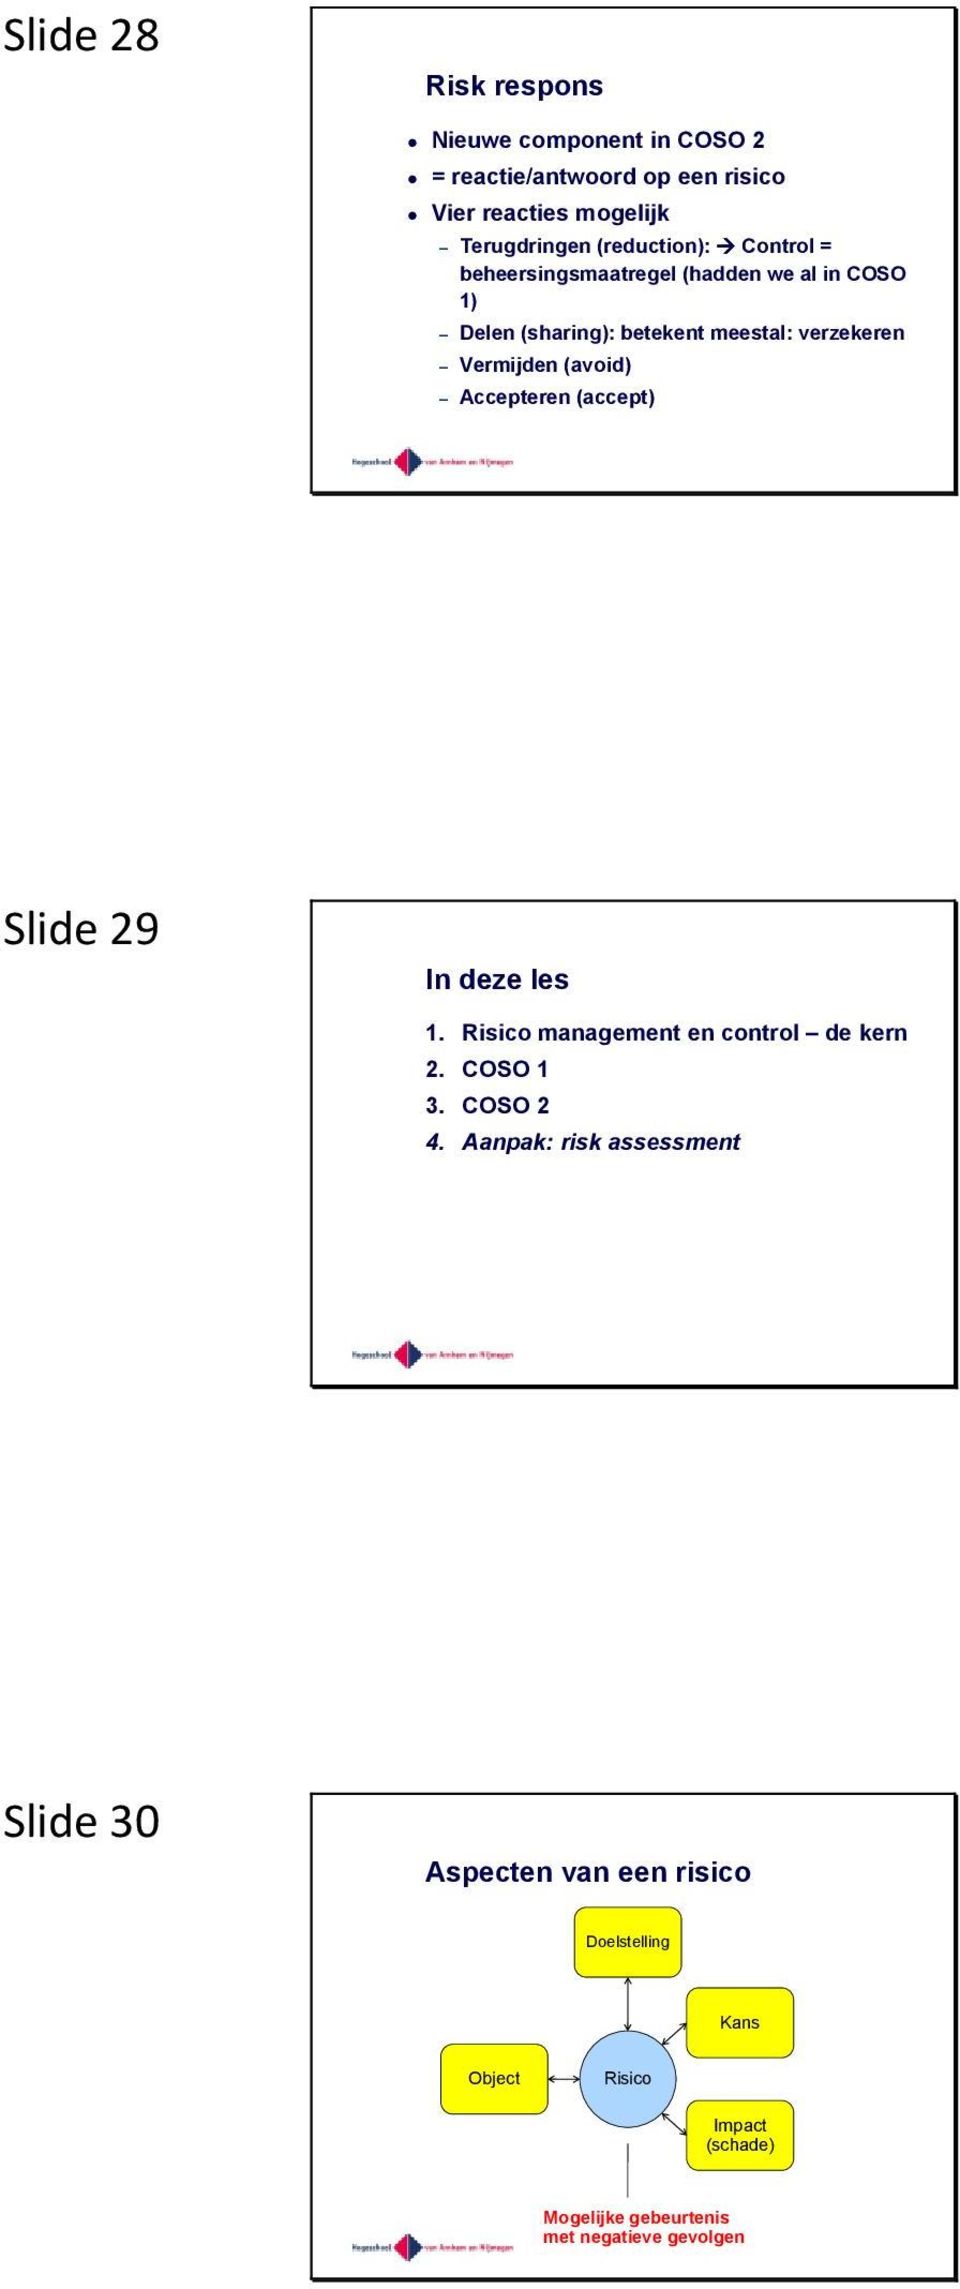 (avoid) Accepteren (accept) Slide 29 In deze les 1. Risico management en control de kern 2. COSO 1 3. COSO 2 4.